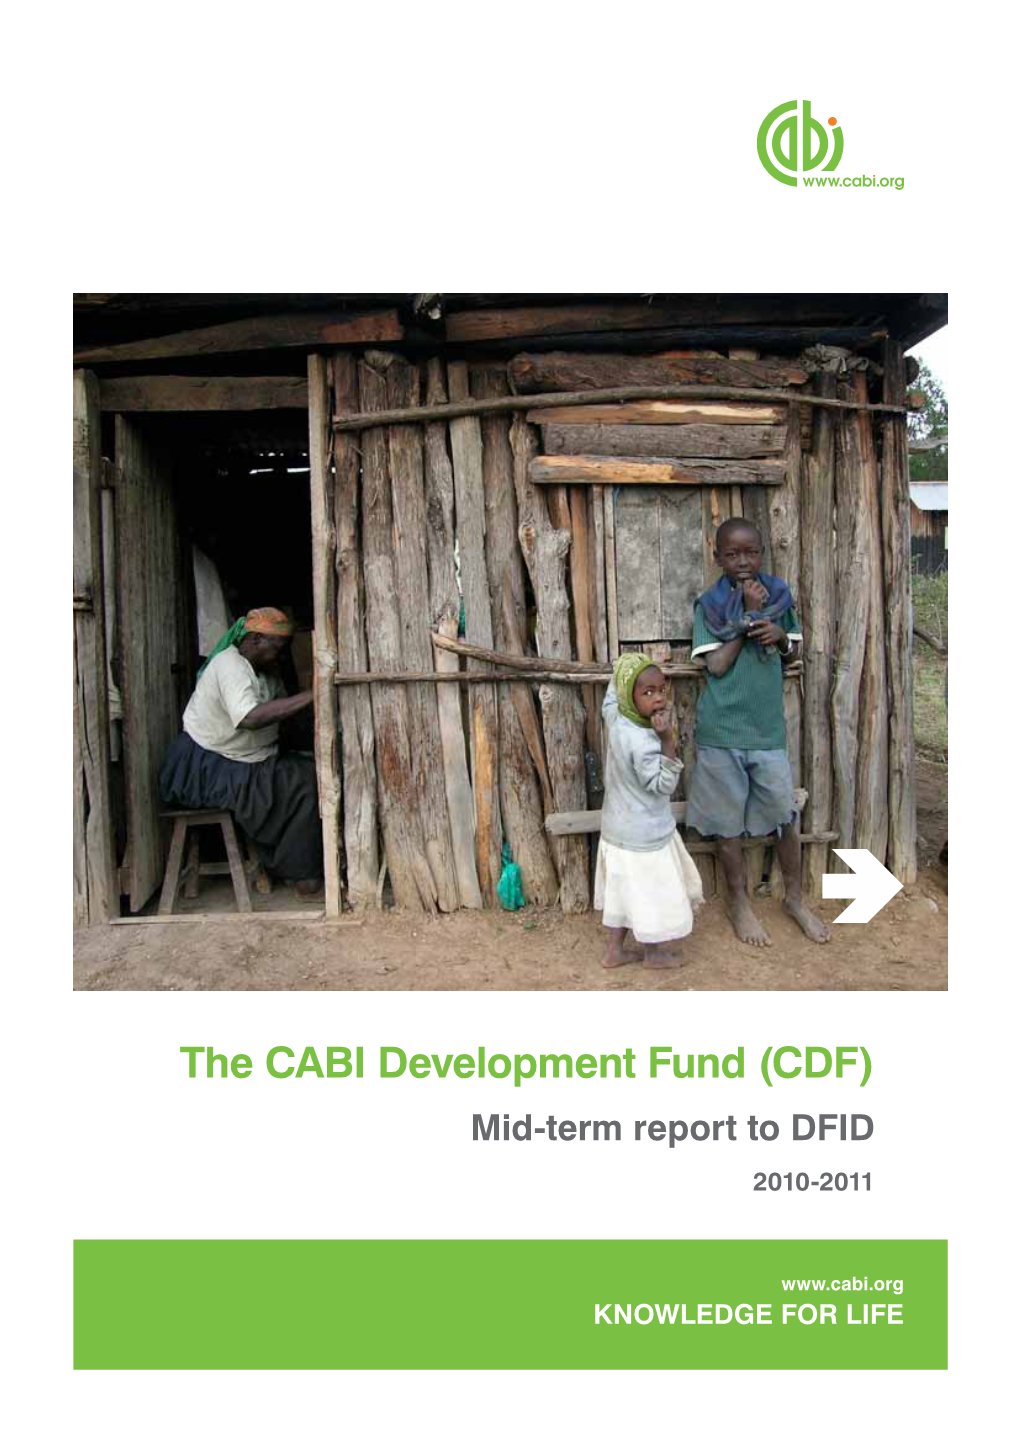 The CABI Development Fund (CDF) Mid-Term Report to DFID 2010-2011